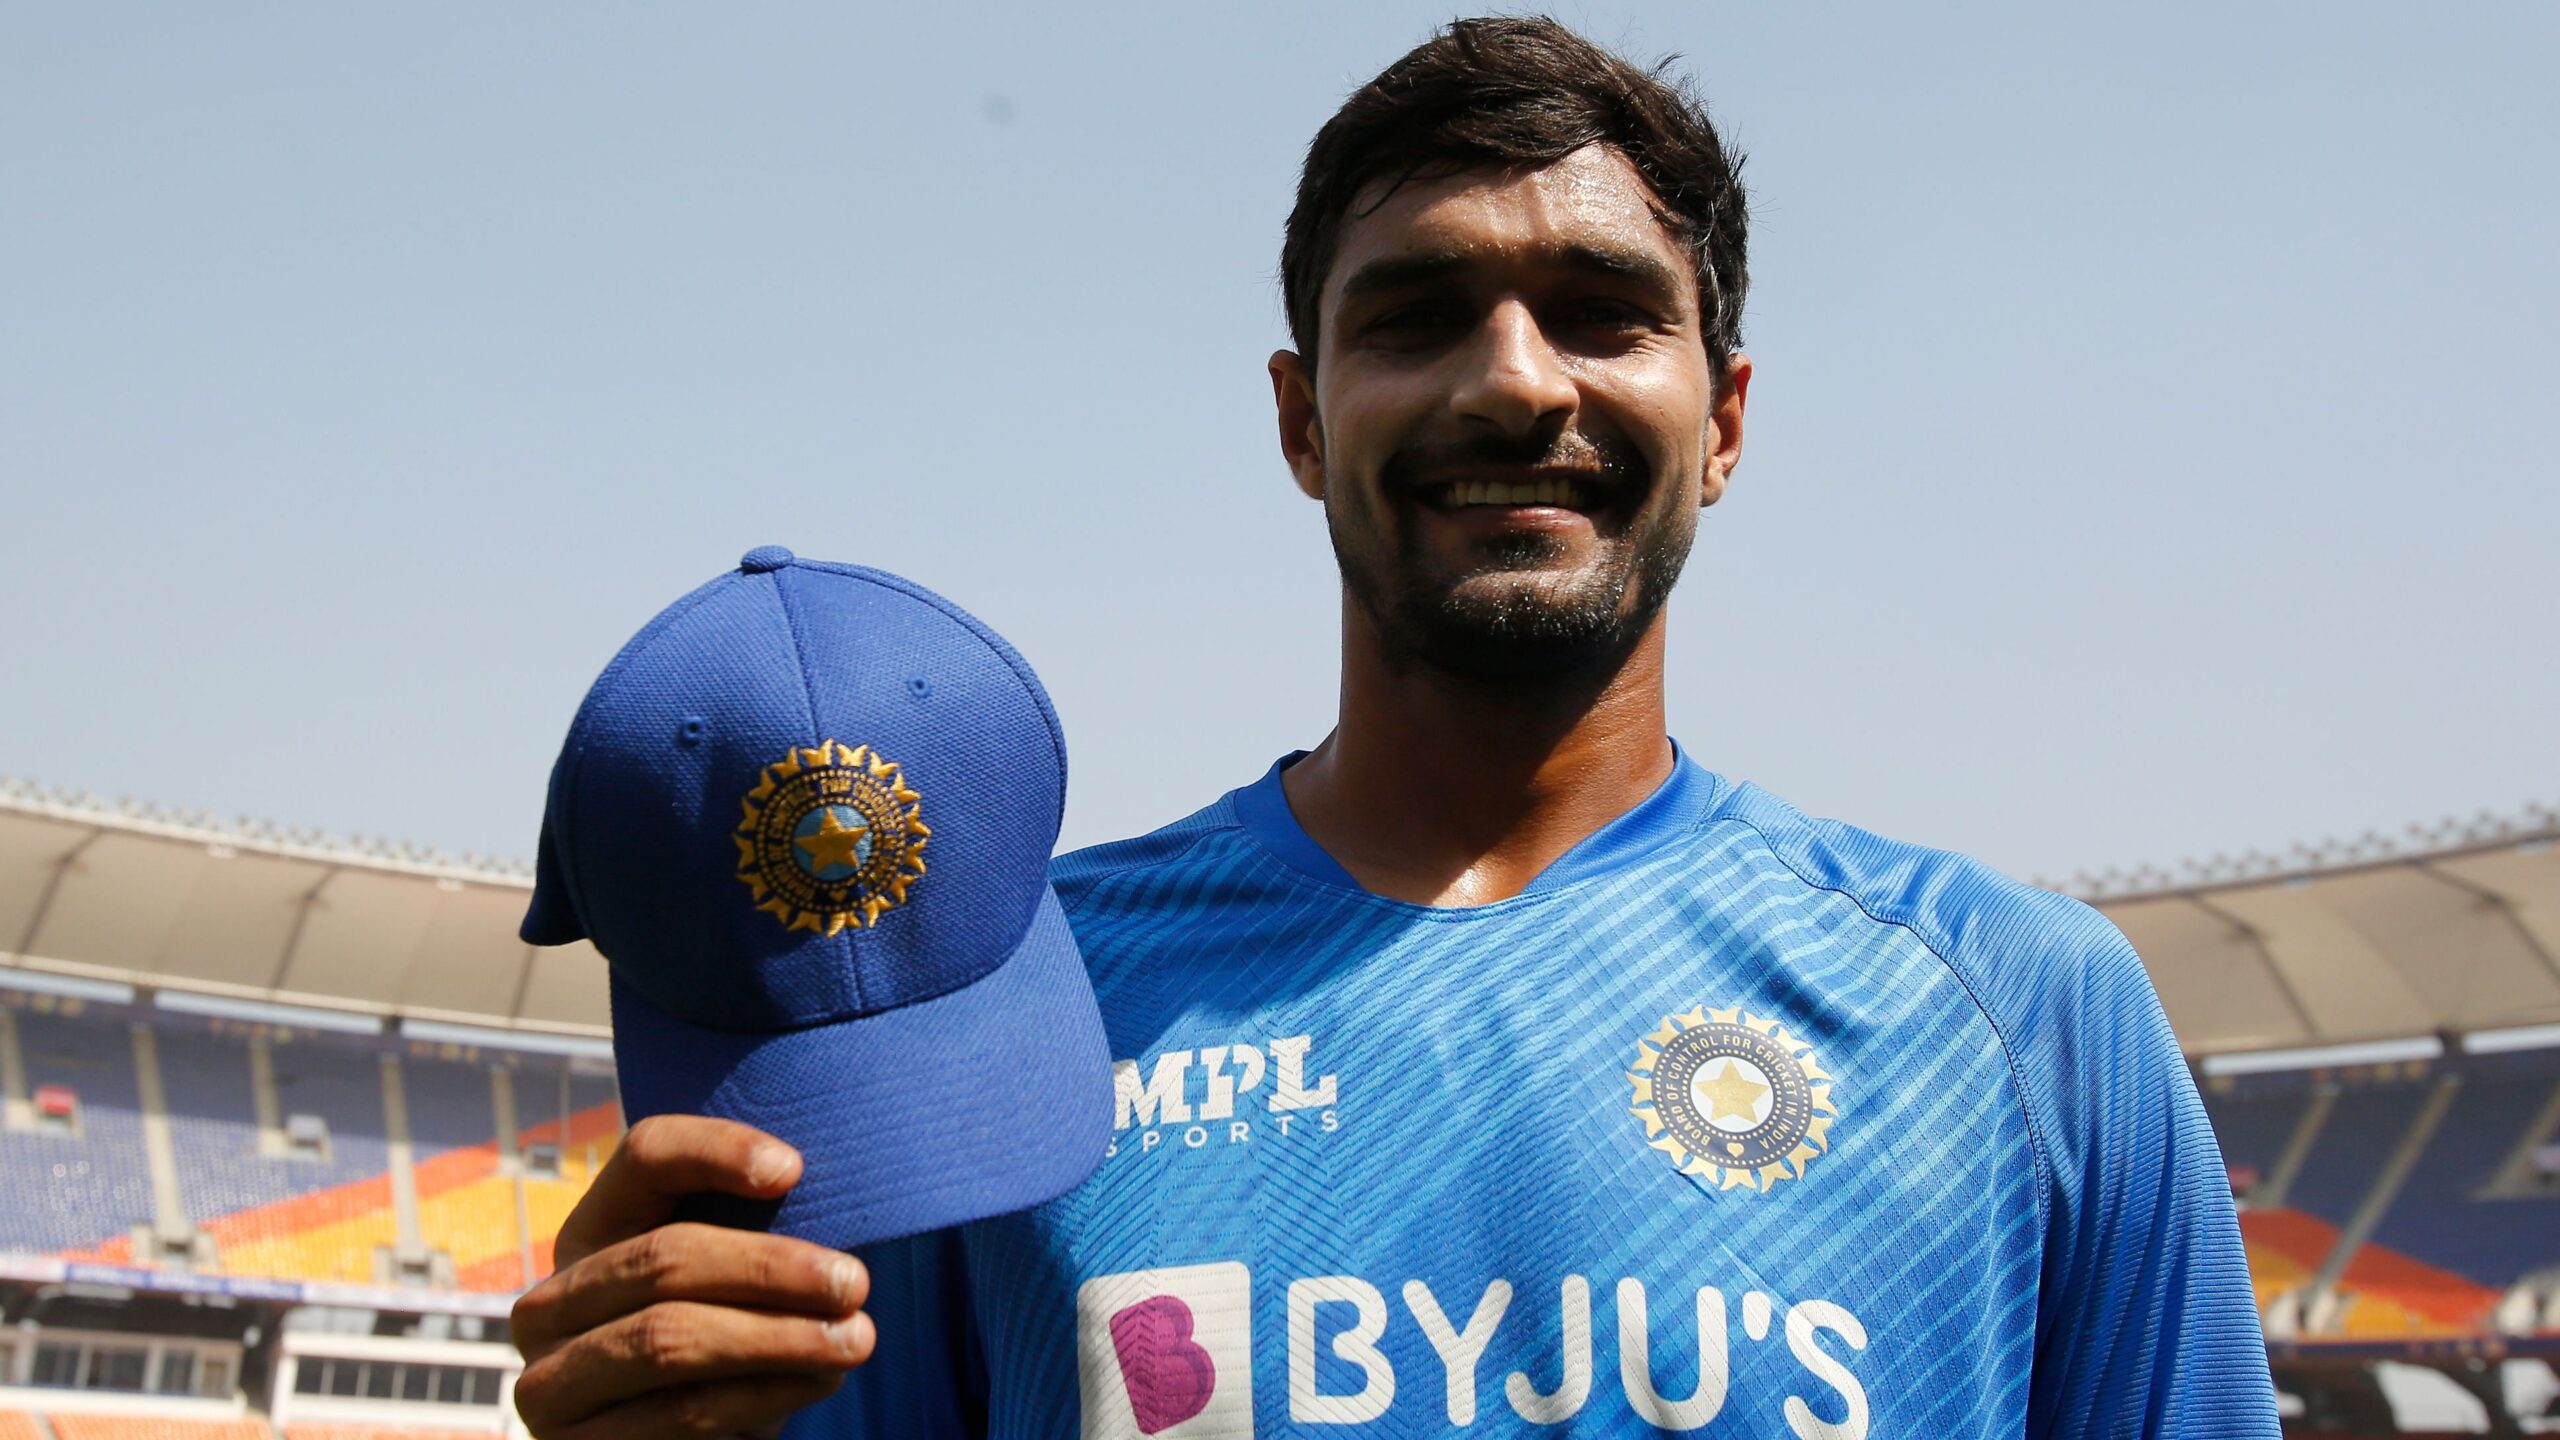 Deepak Hooda with his India cap Image: BCCI